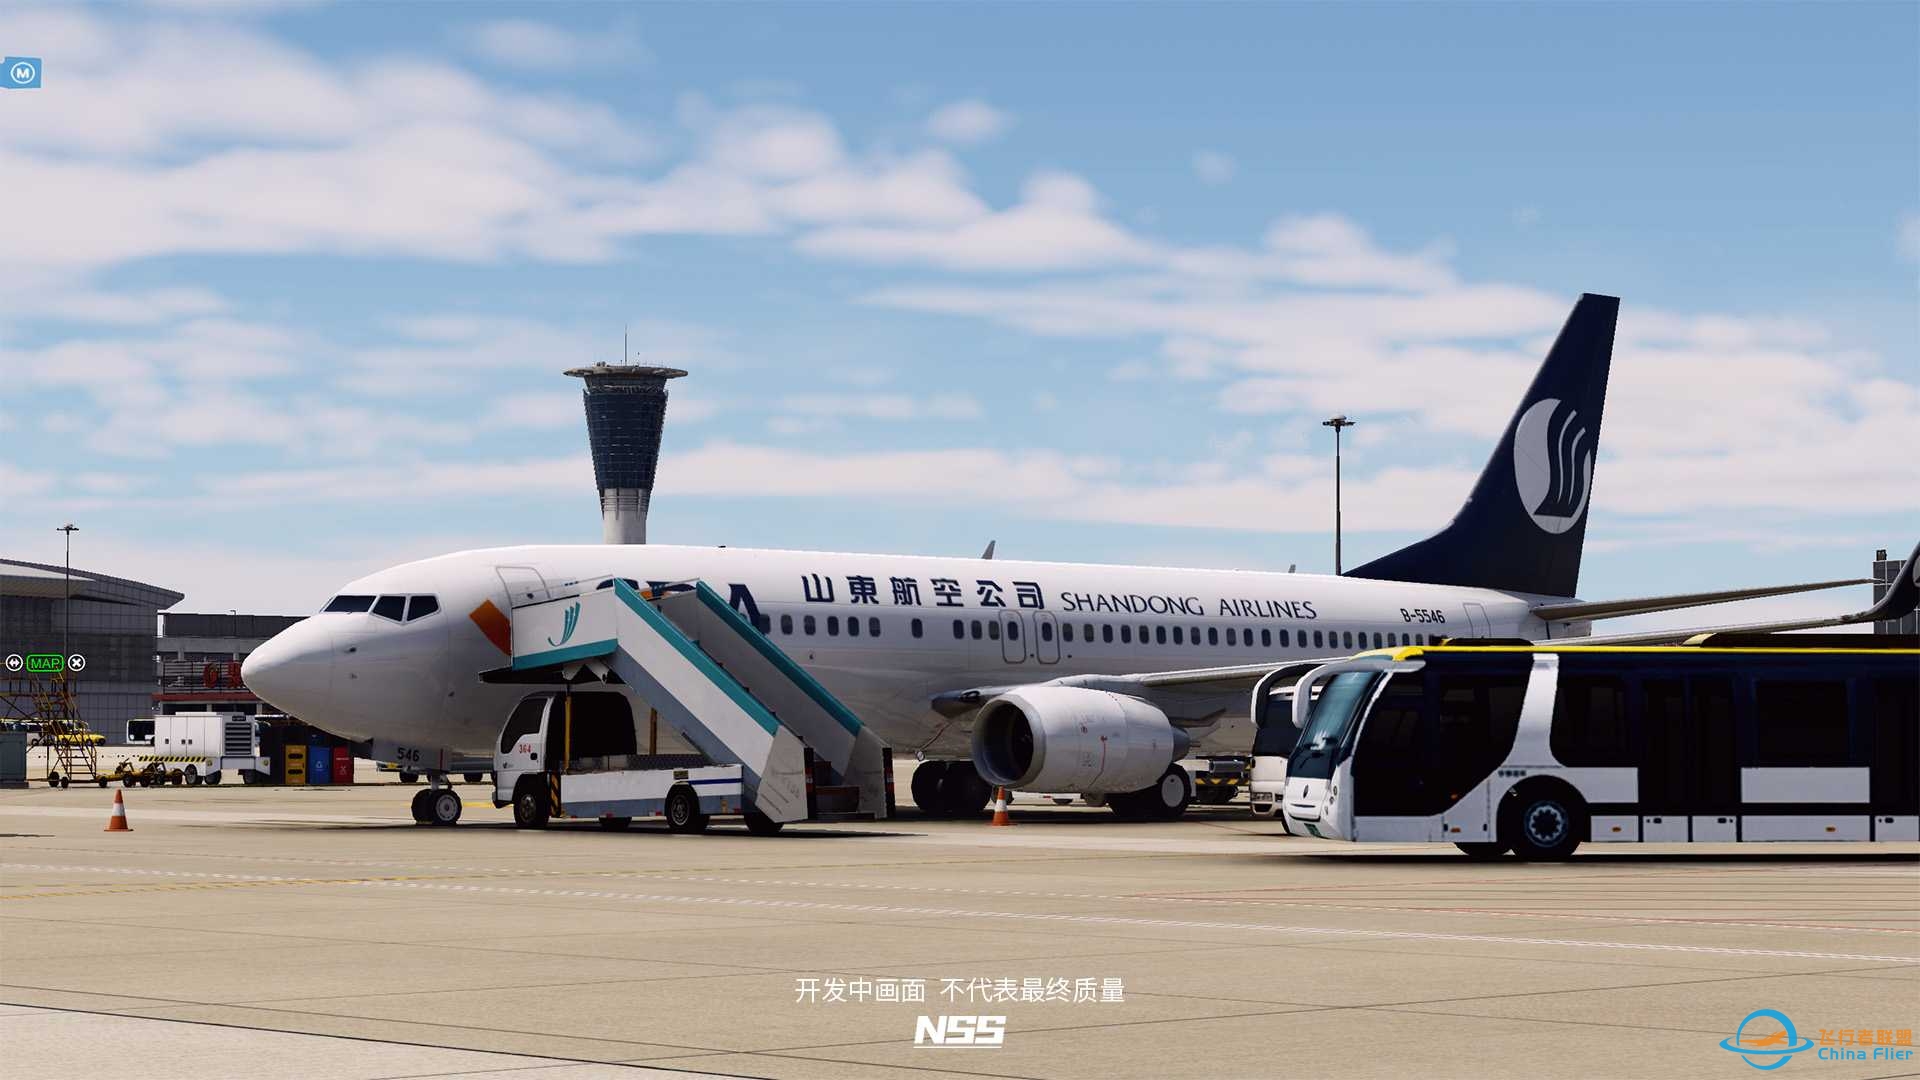 NSS地景开发组 | ZSJN | 济南遥墙国际机场项目最新进展-7377 